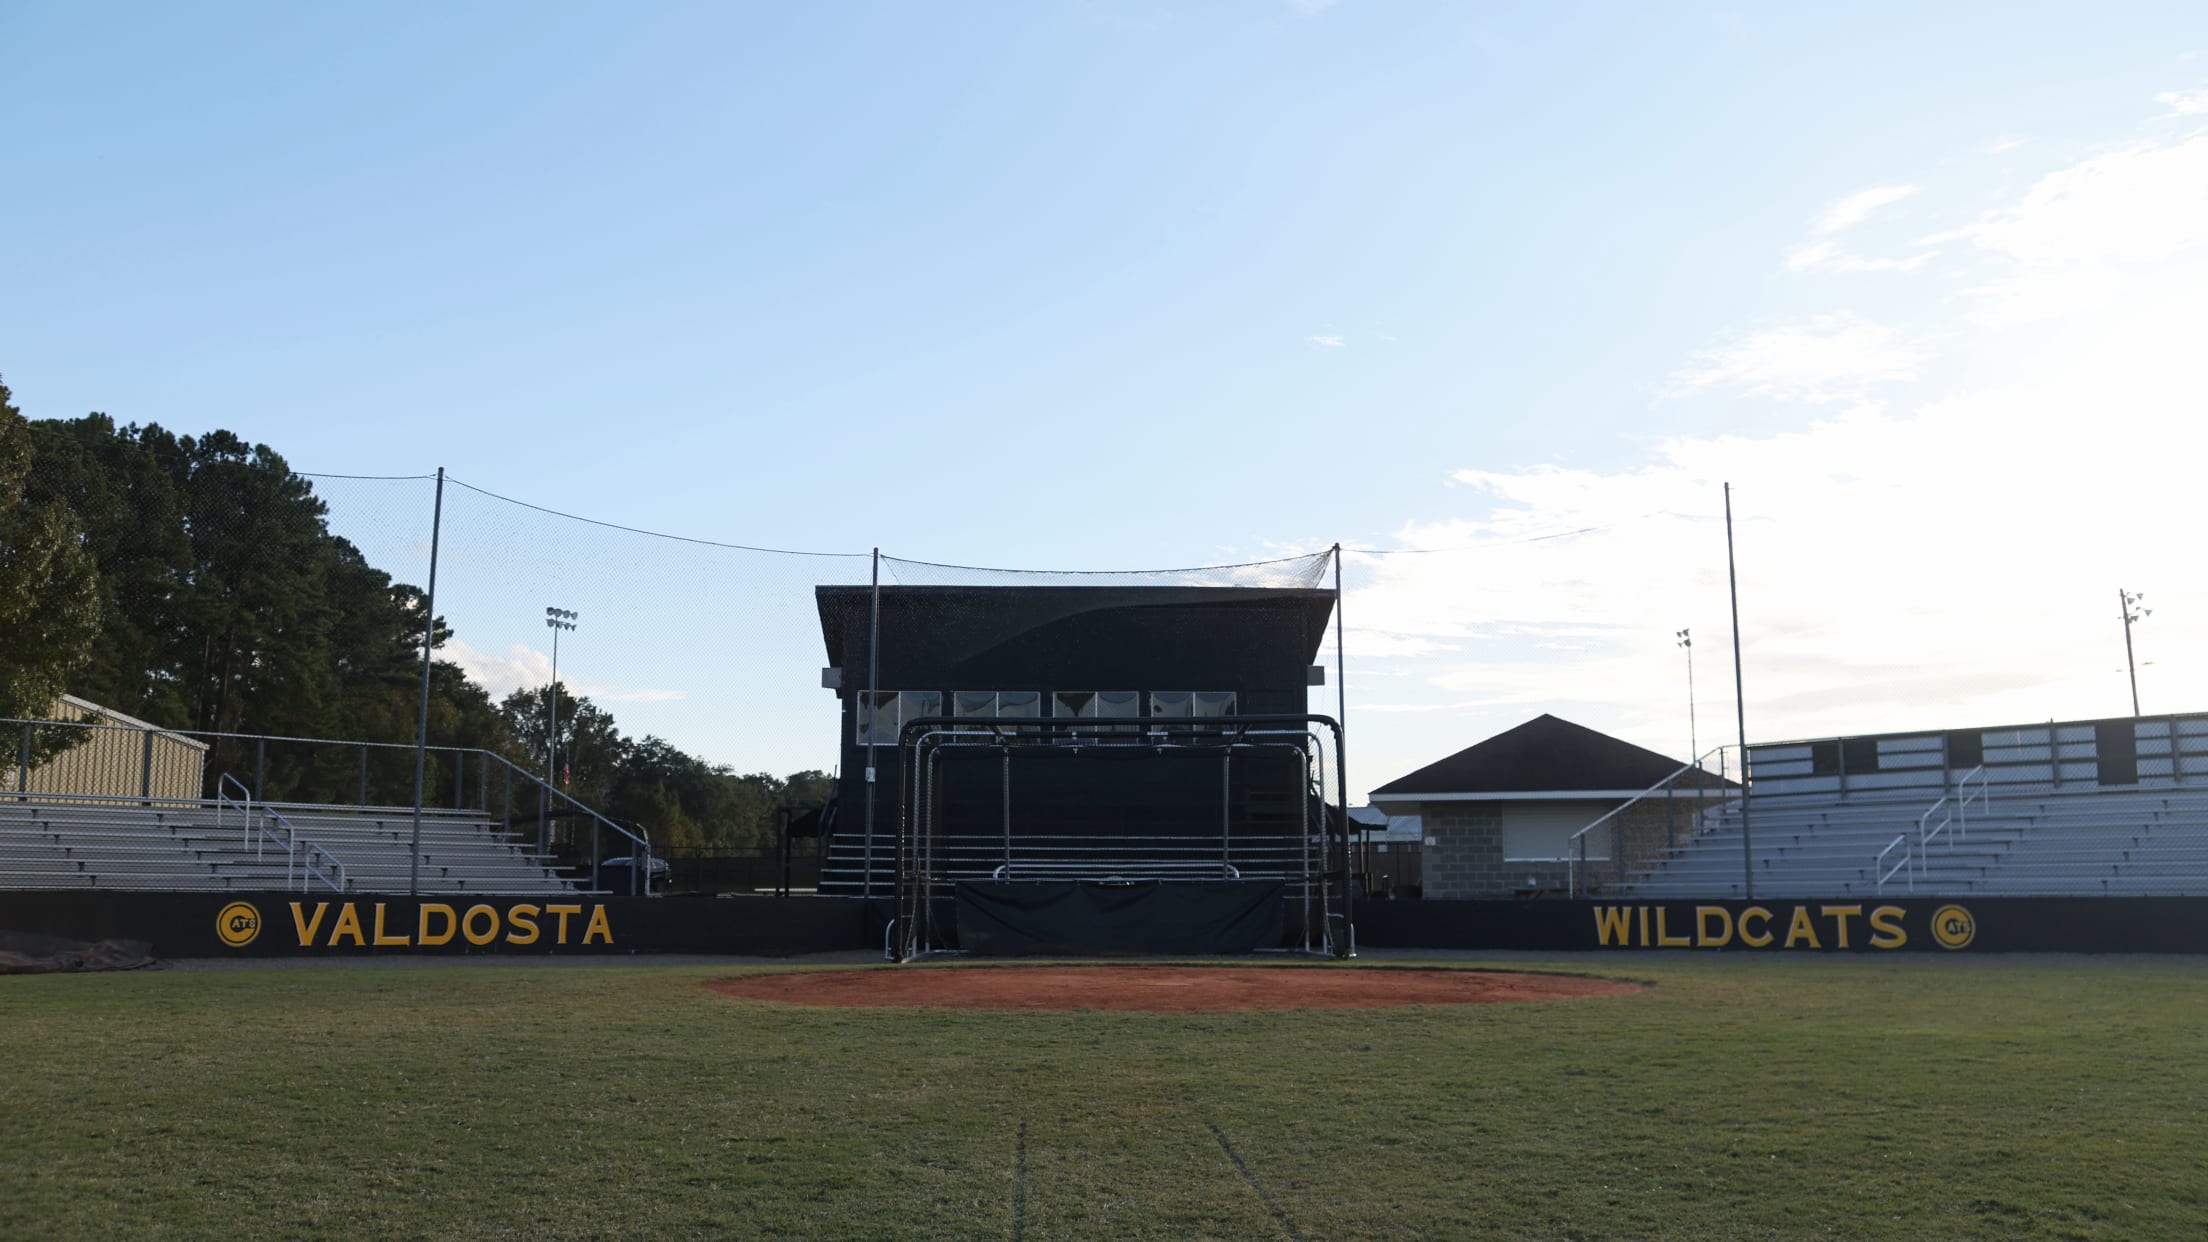 Baseball field home to the Valdosta Wildcat baseball team.